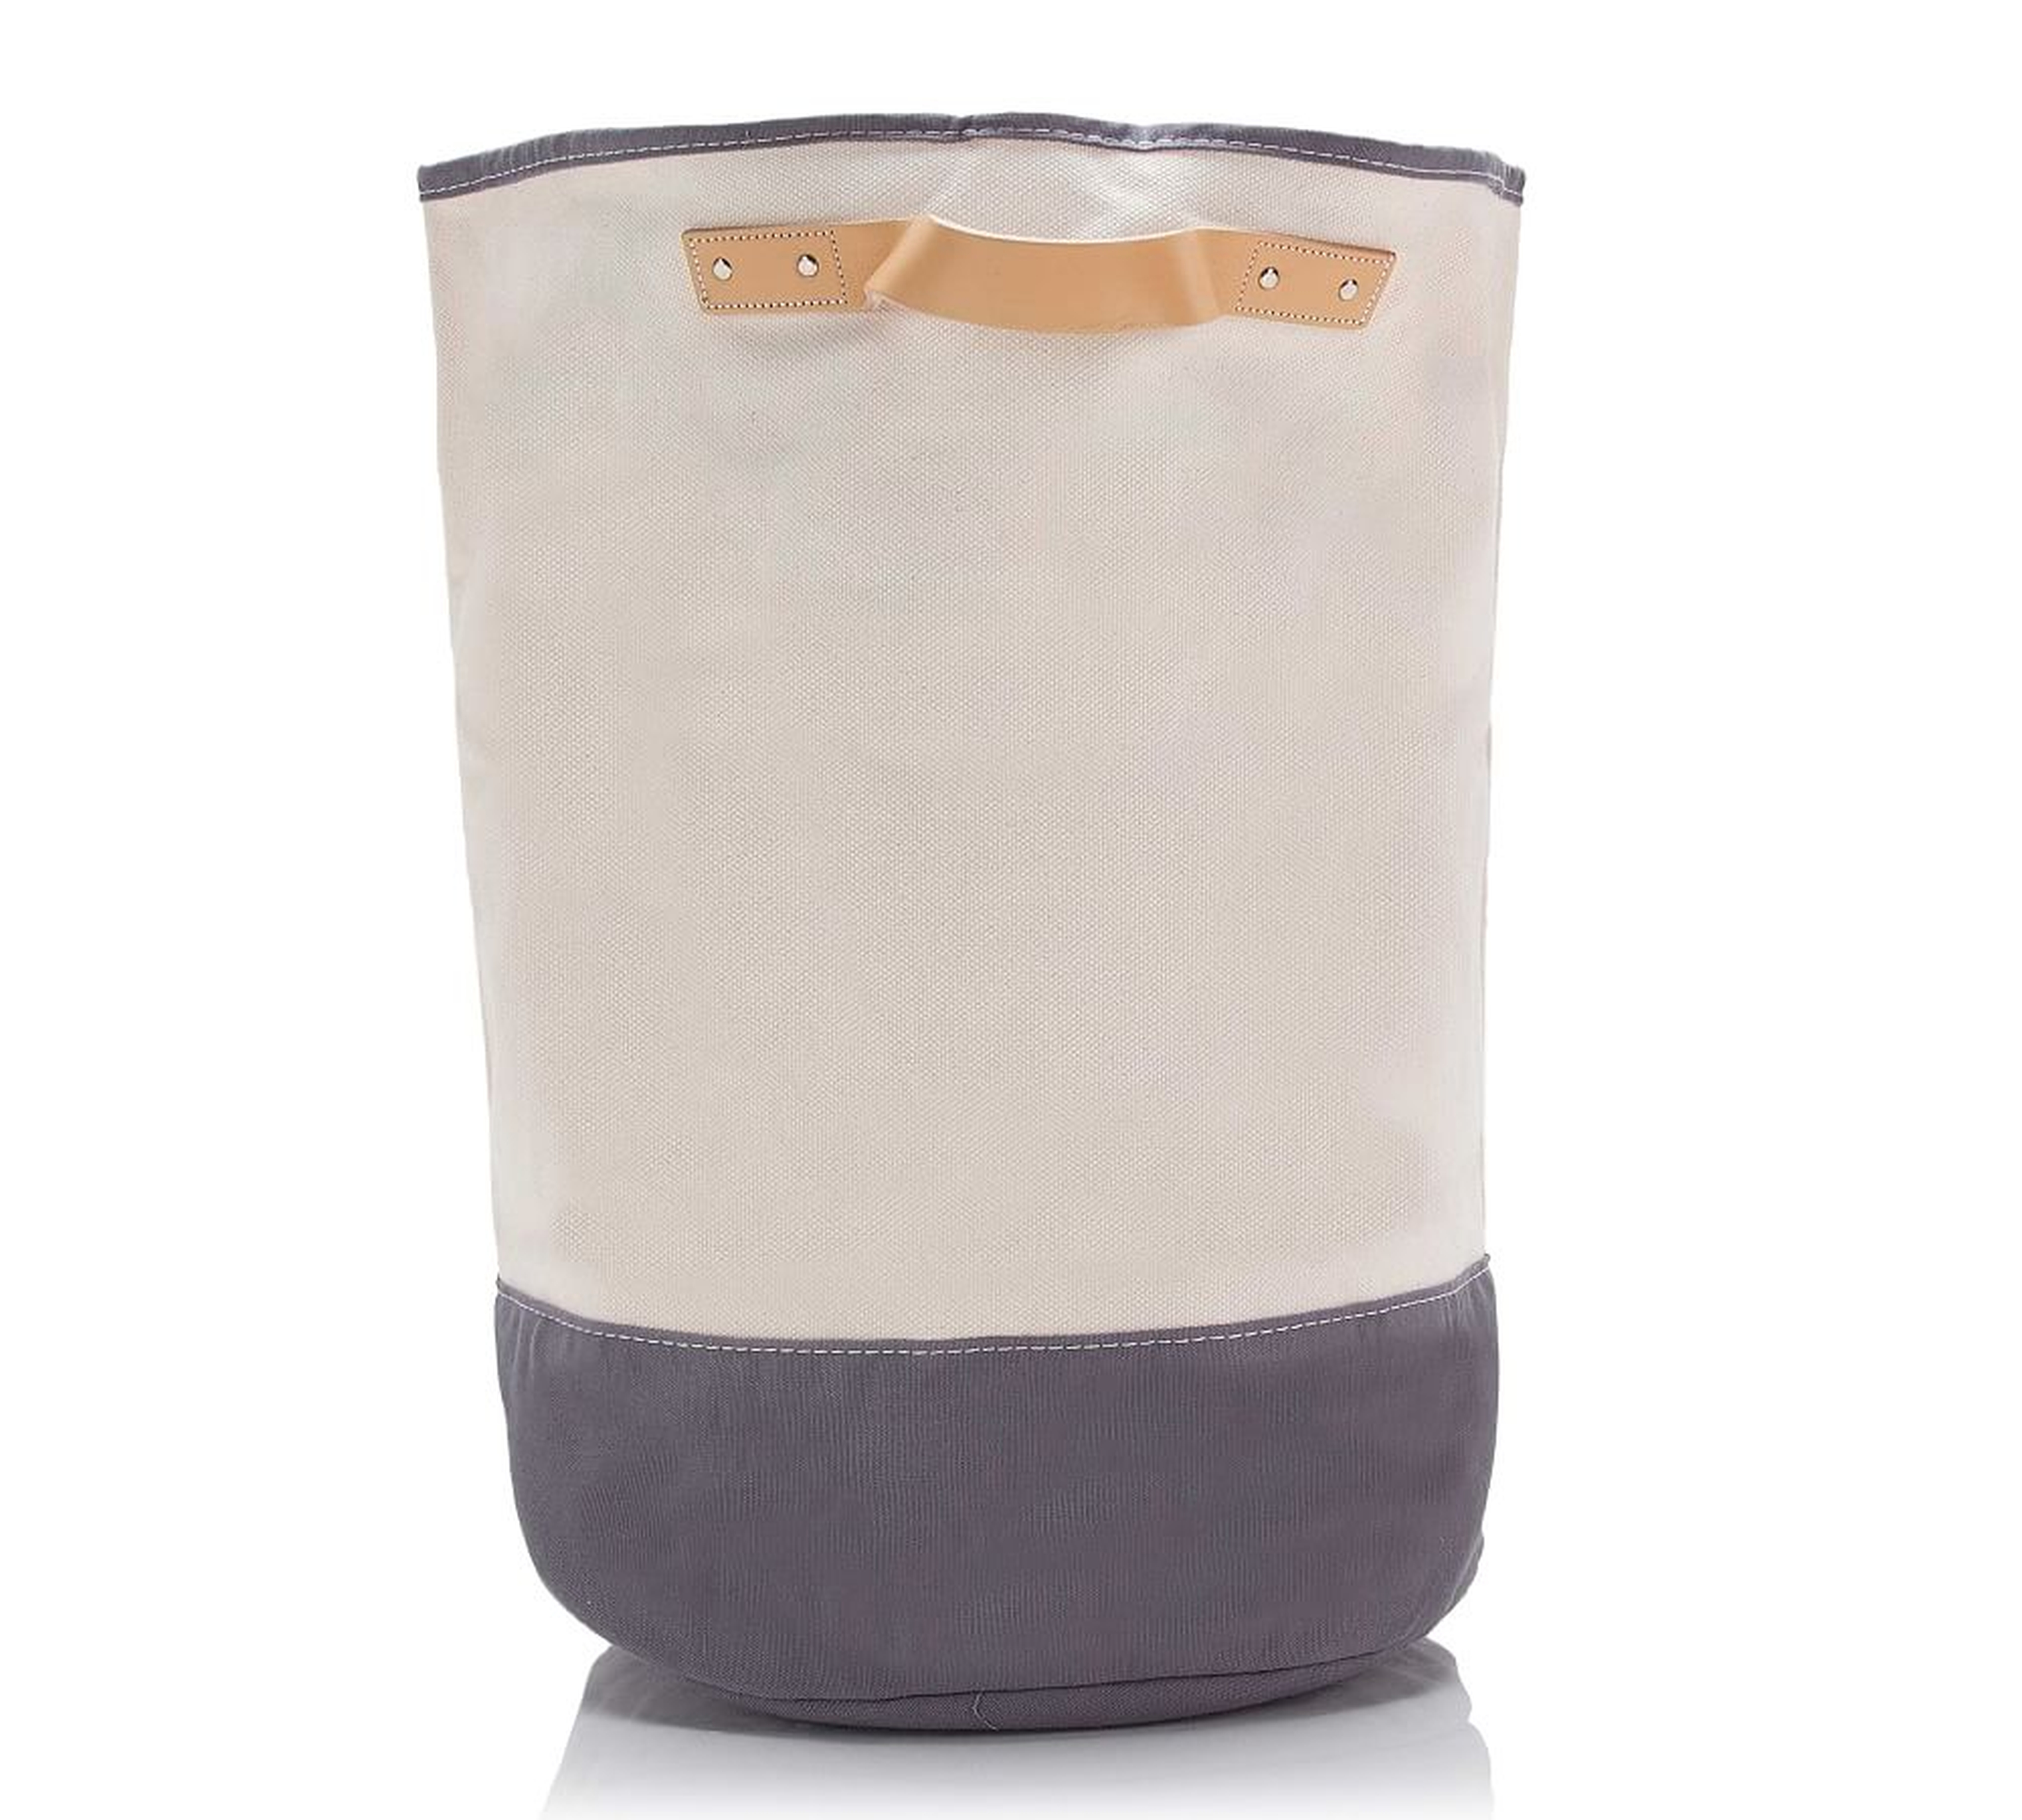 Laundry Hamper Storage Basket W/ Leather Handles, Canvas Gray - Pottery Barn